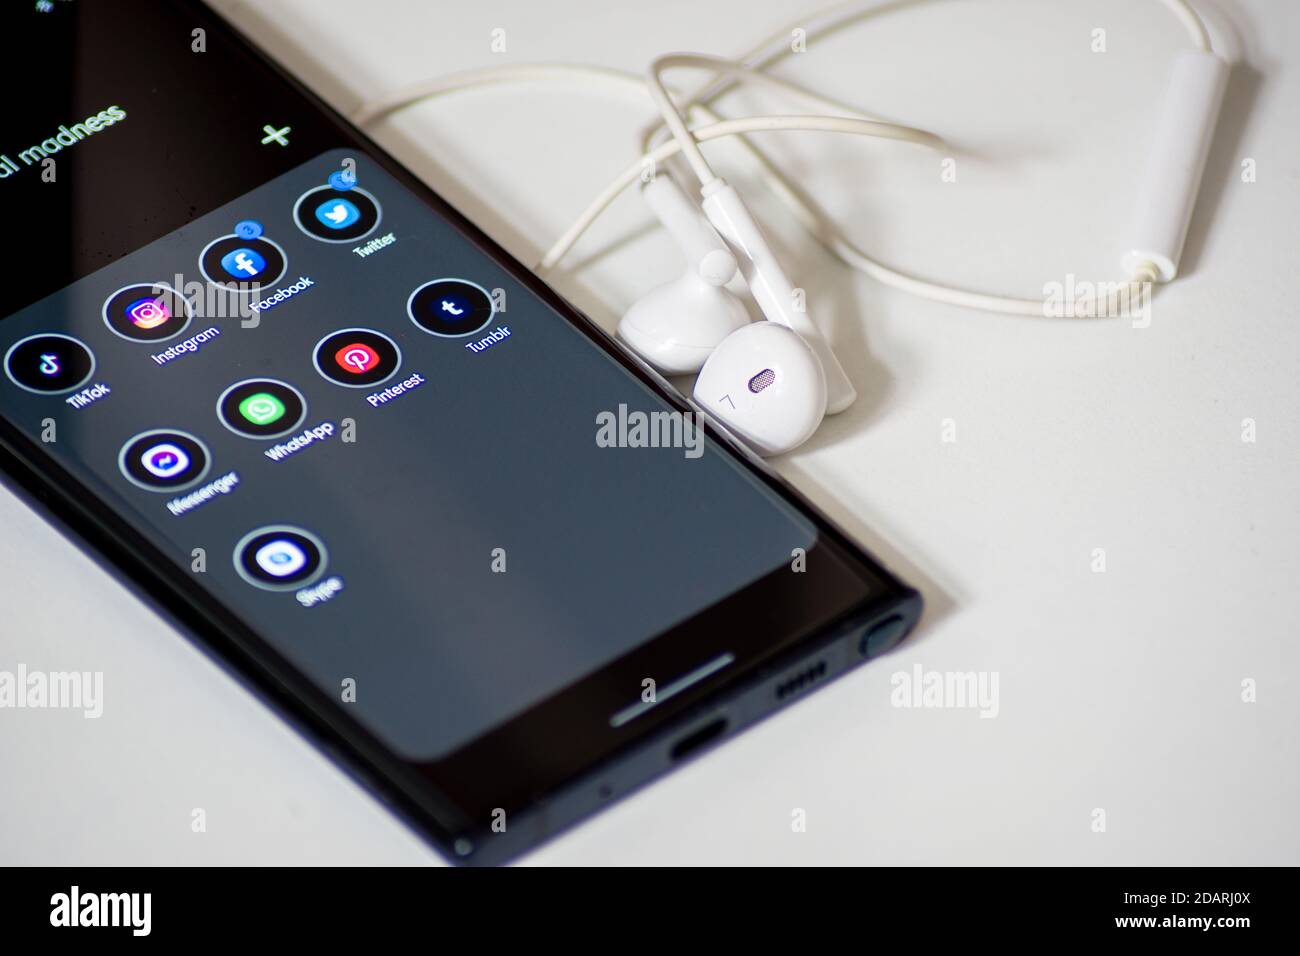 Vienna / Austria / November 13, 2020: Black smartphone with social media apps next to white earphones on the desk Stock Photo